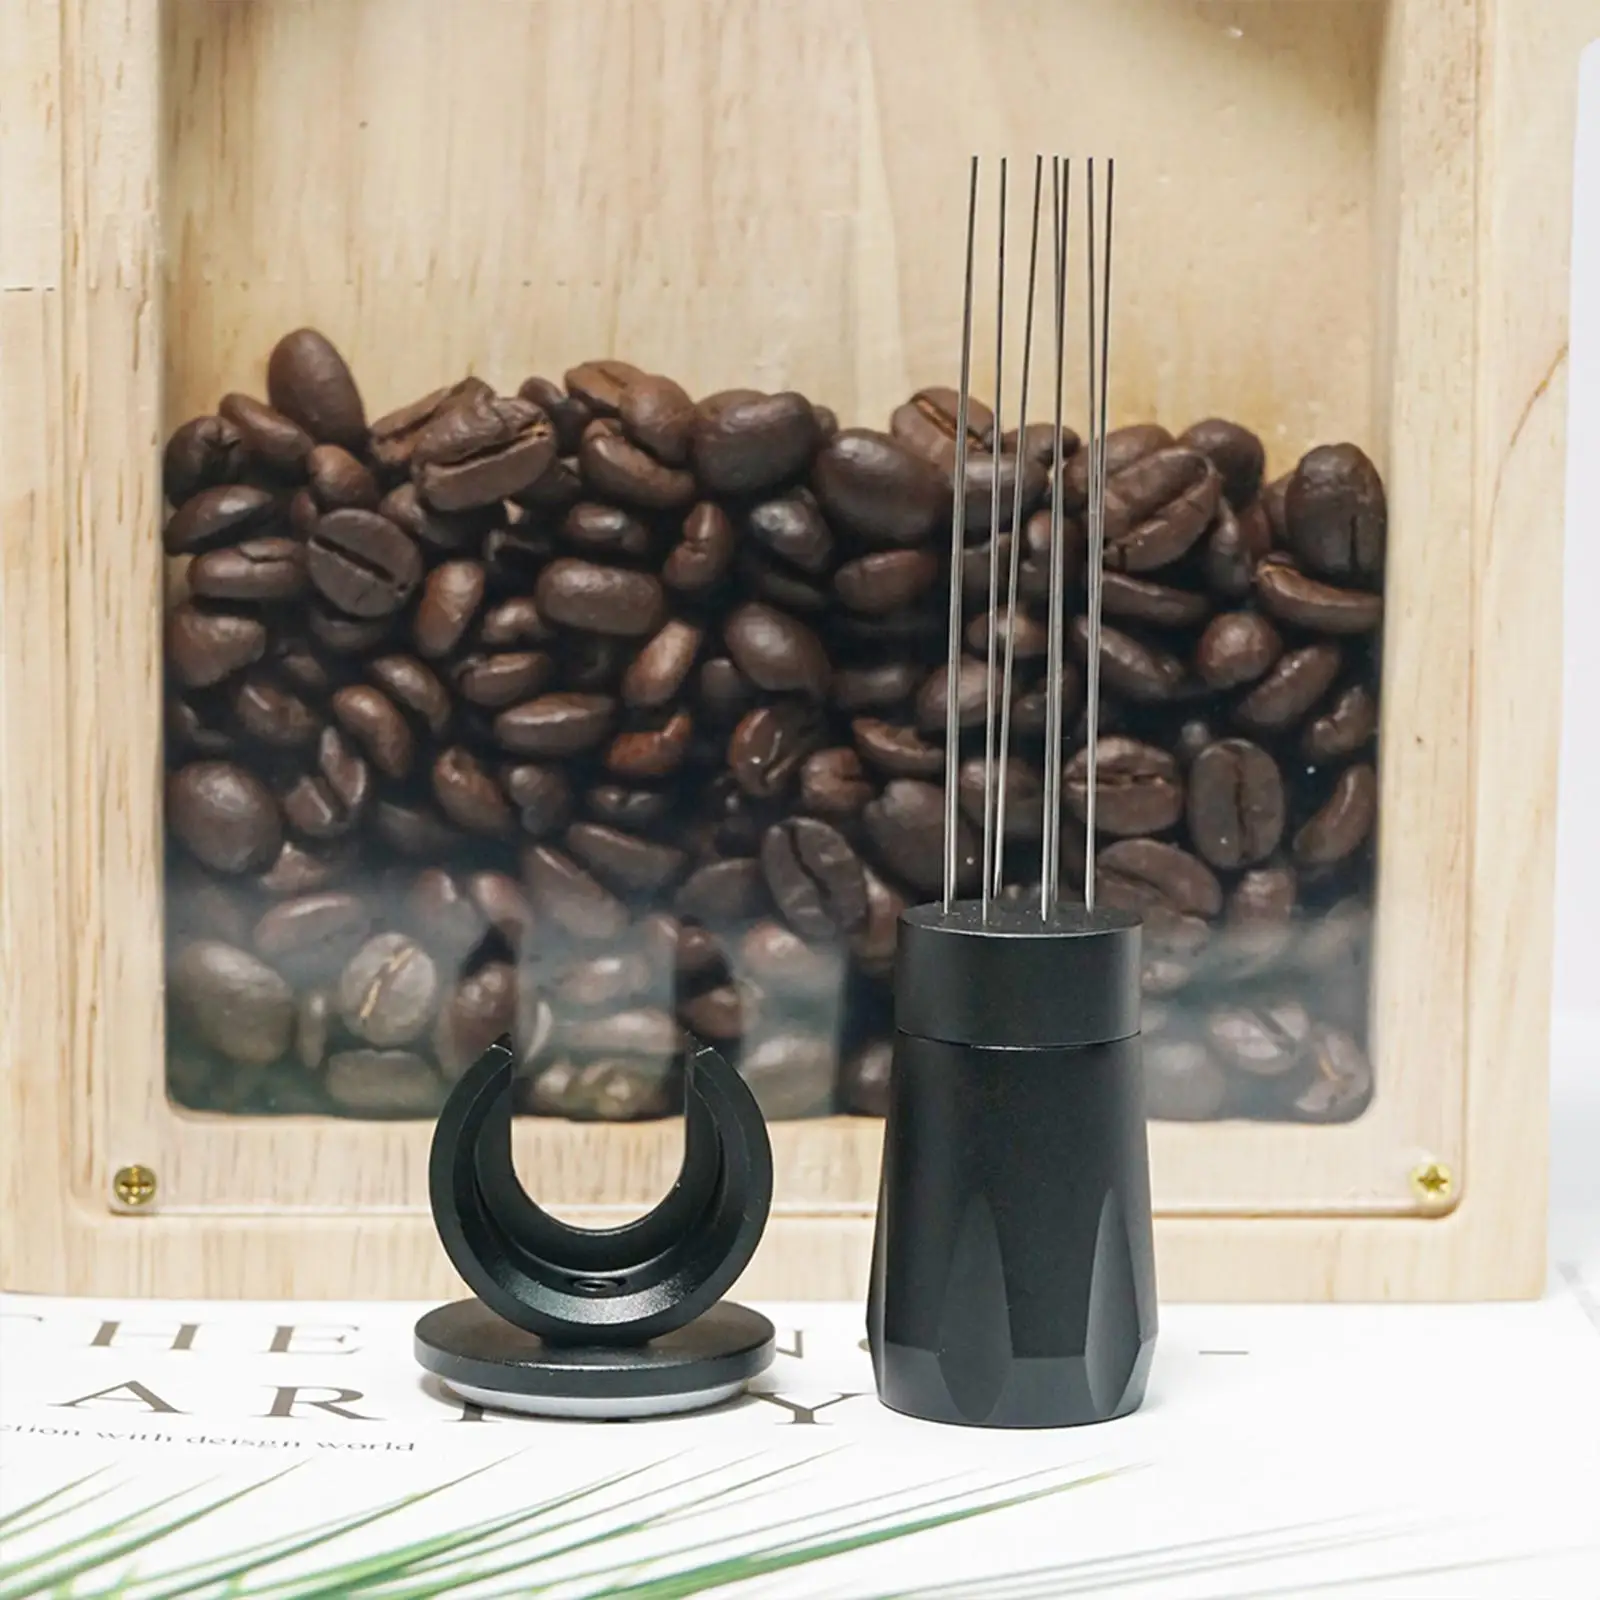 Coffee Tamper Distributor Distribution Espresso Tools for Shop Cafe Home